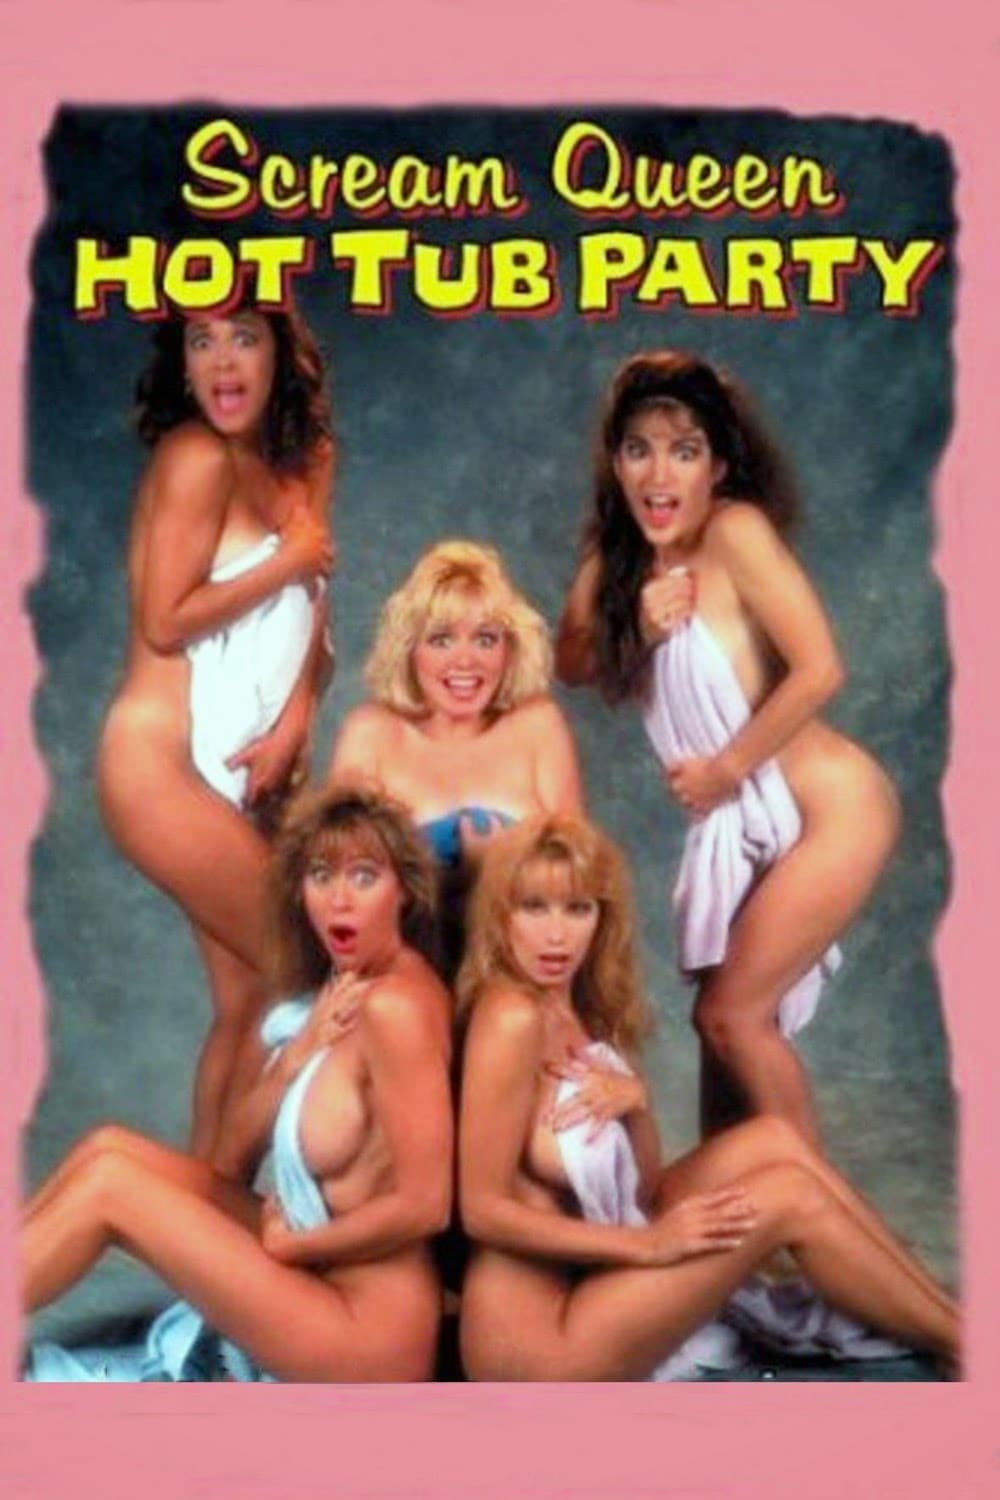 Scream Queen Hot Tub Party (1991)